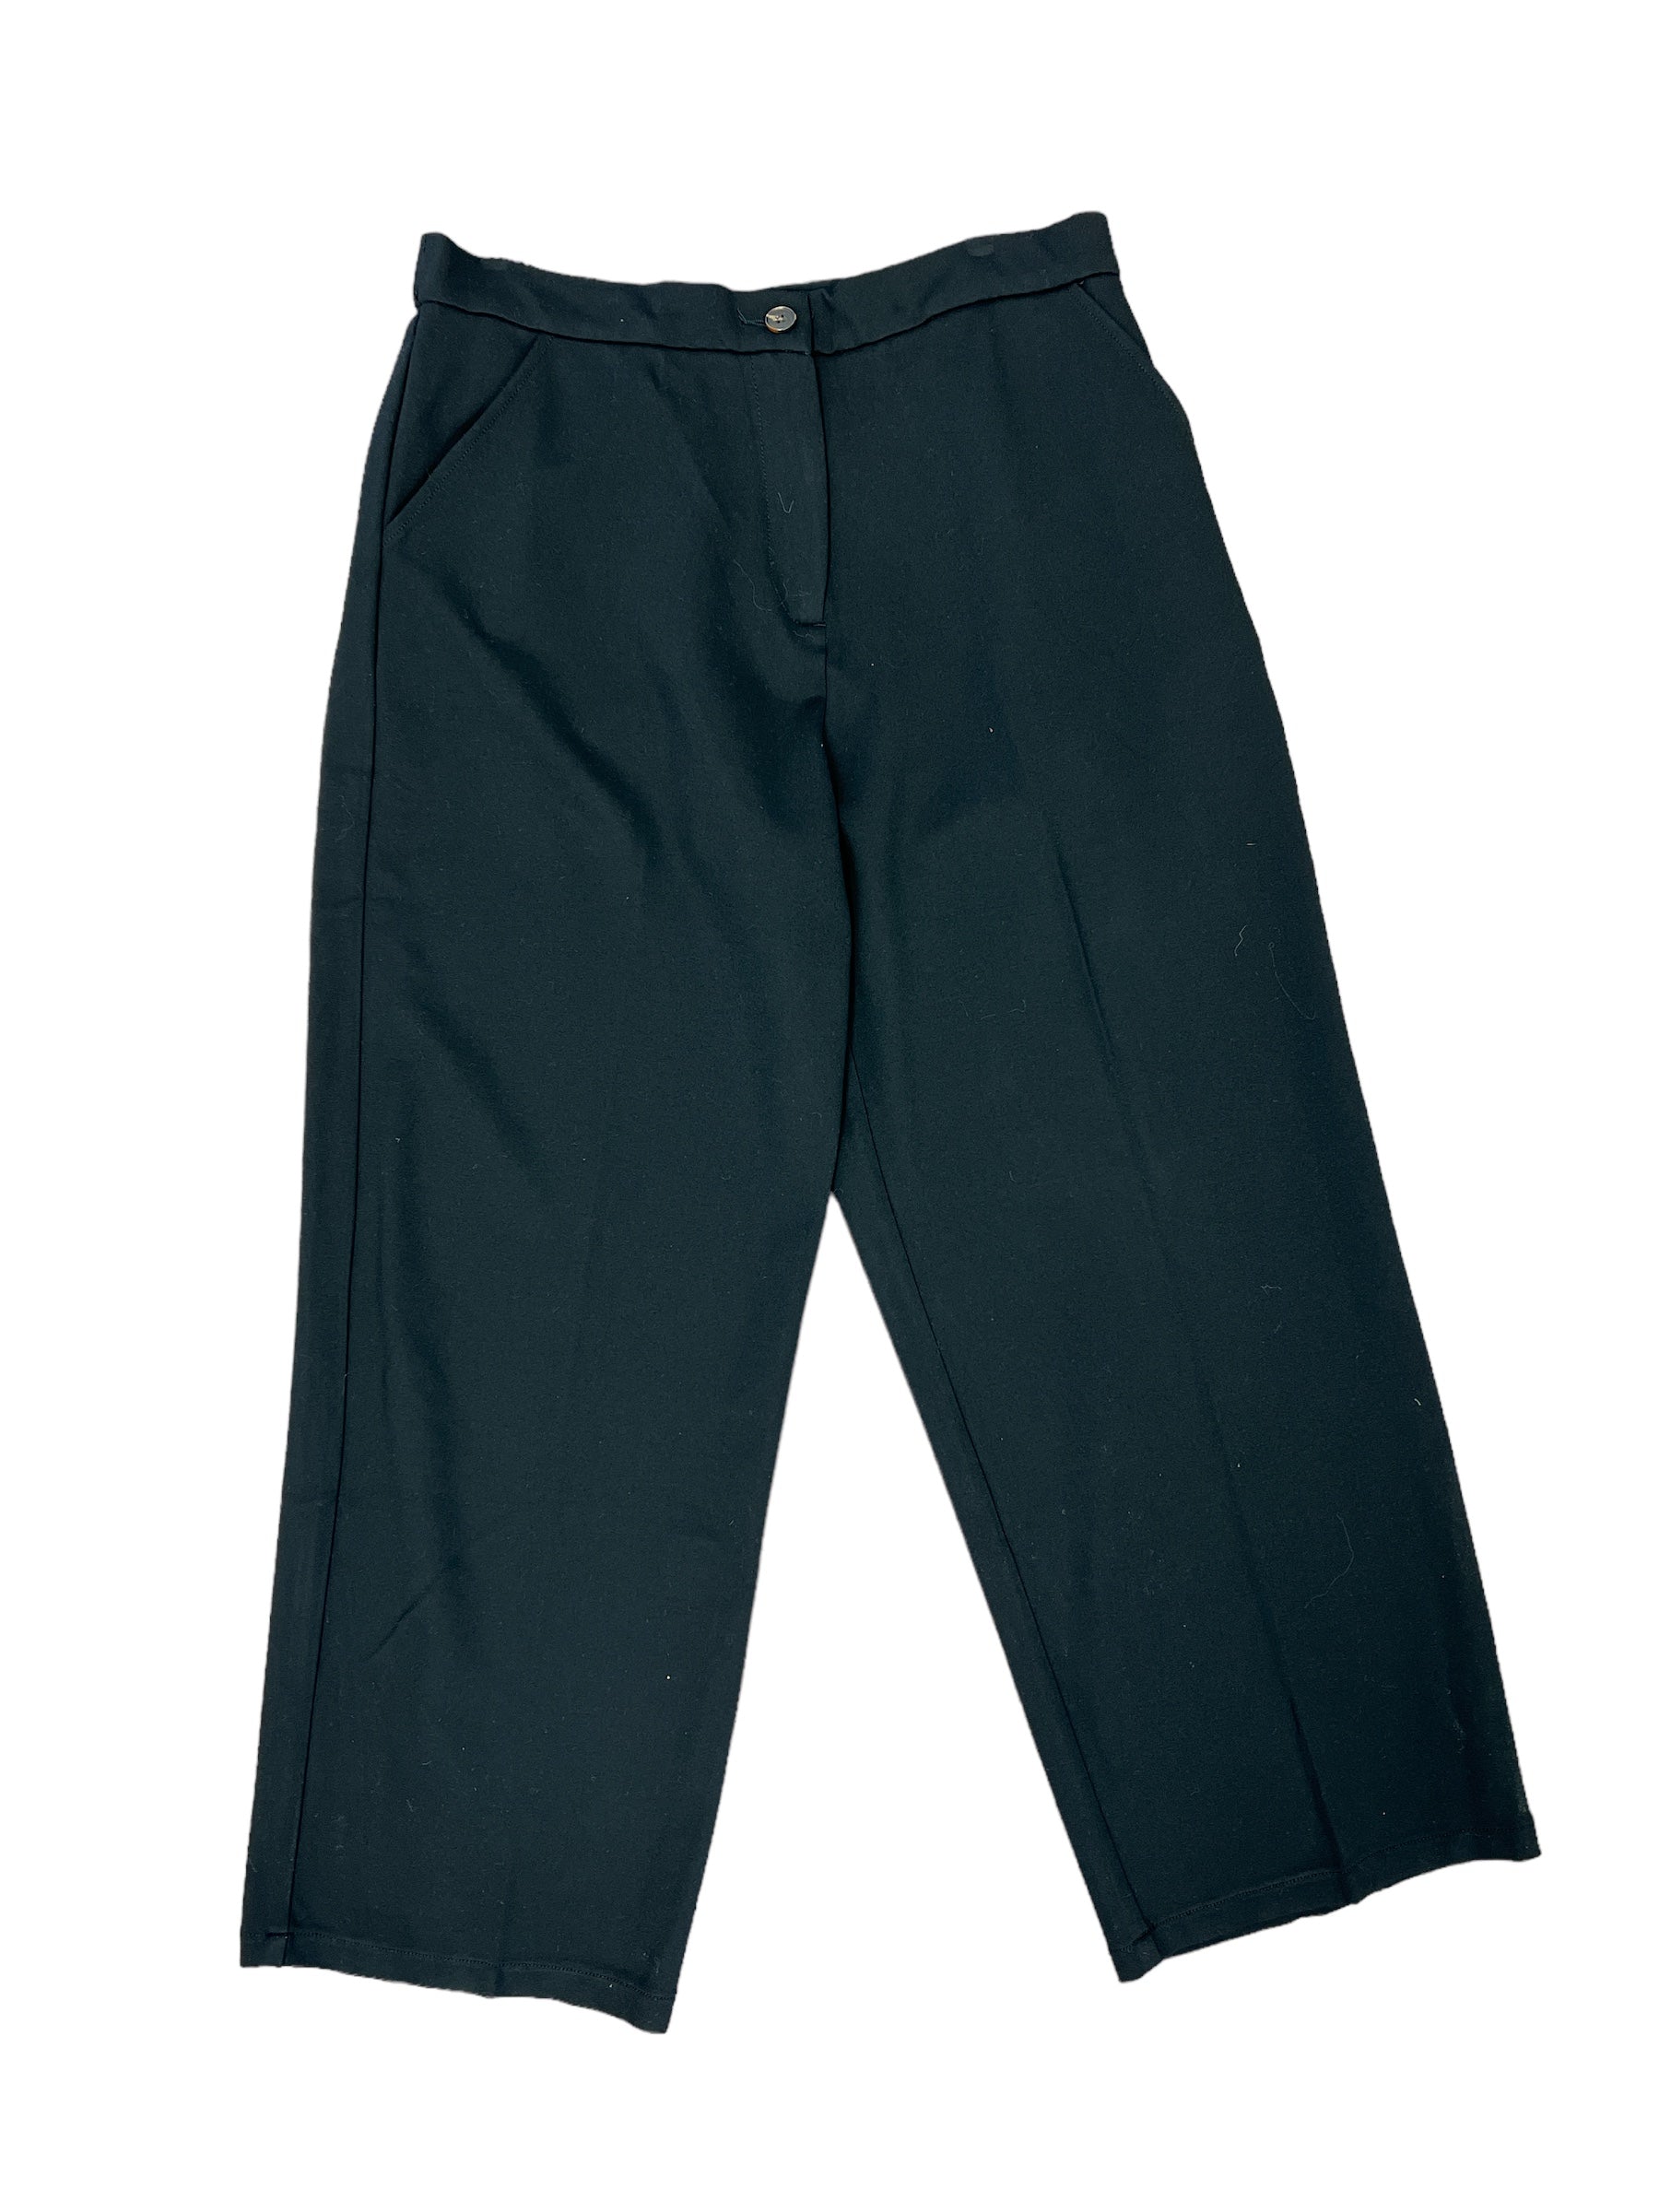 Bishop Pants-230 Pants-Simply Stylish Boutique-Simply Stylish Boutique | Women’s & Kid’s Fashion | Paducah, KY